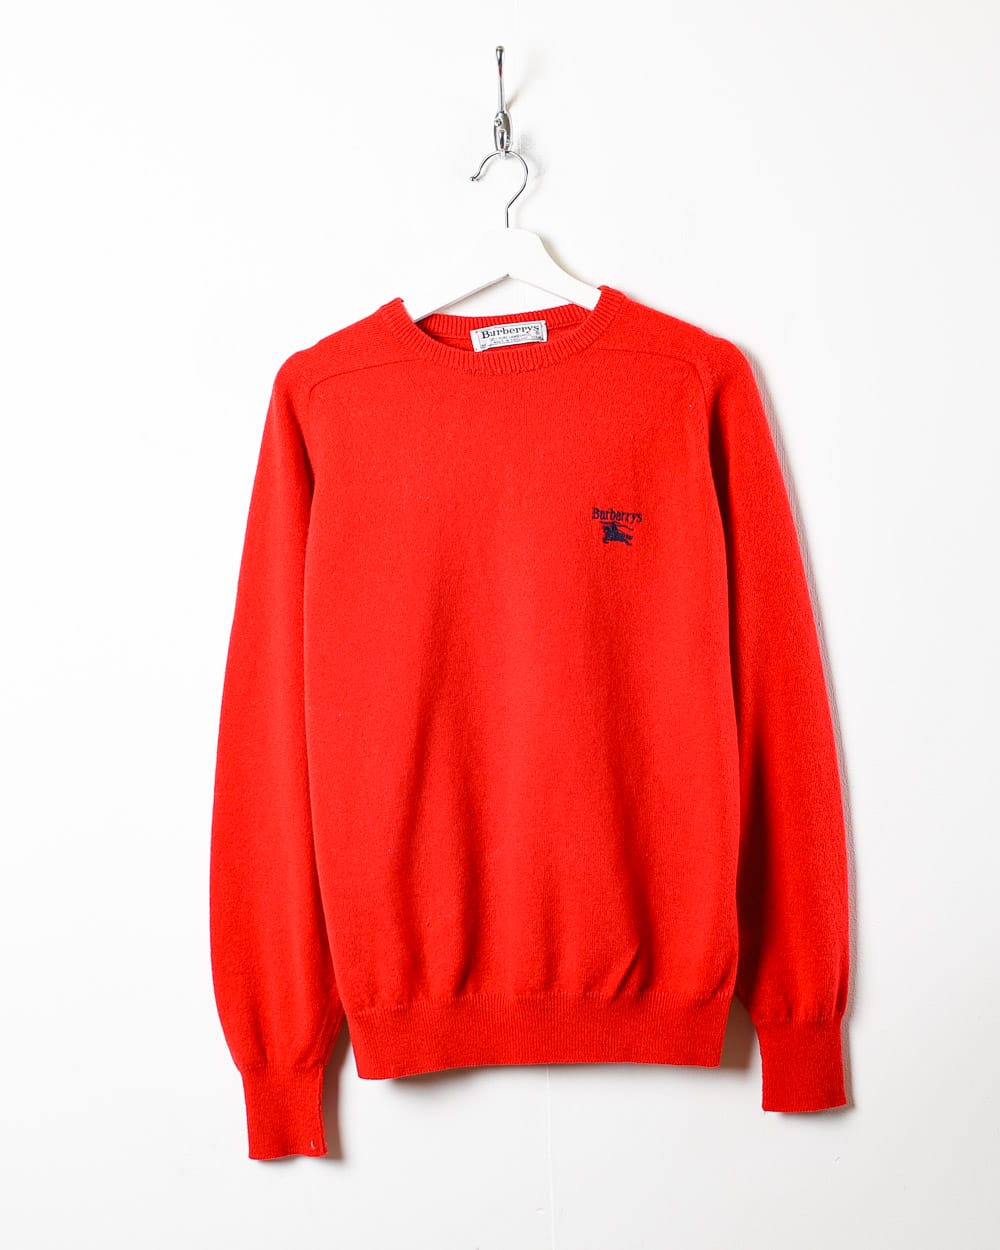 Red Burberry Lambswool Sweatshirt - Medium